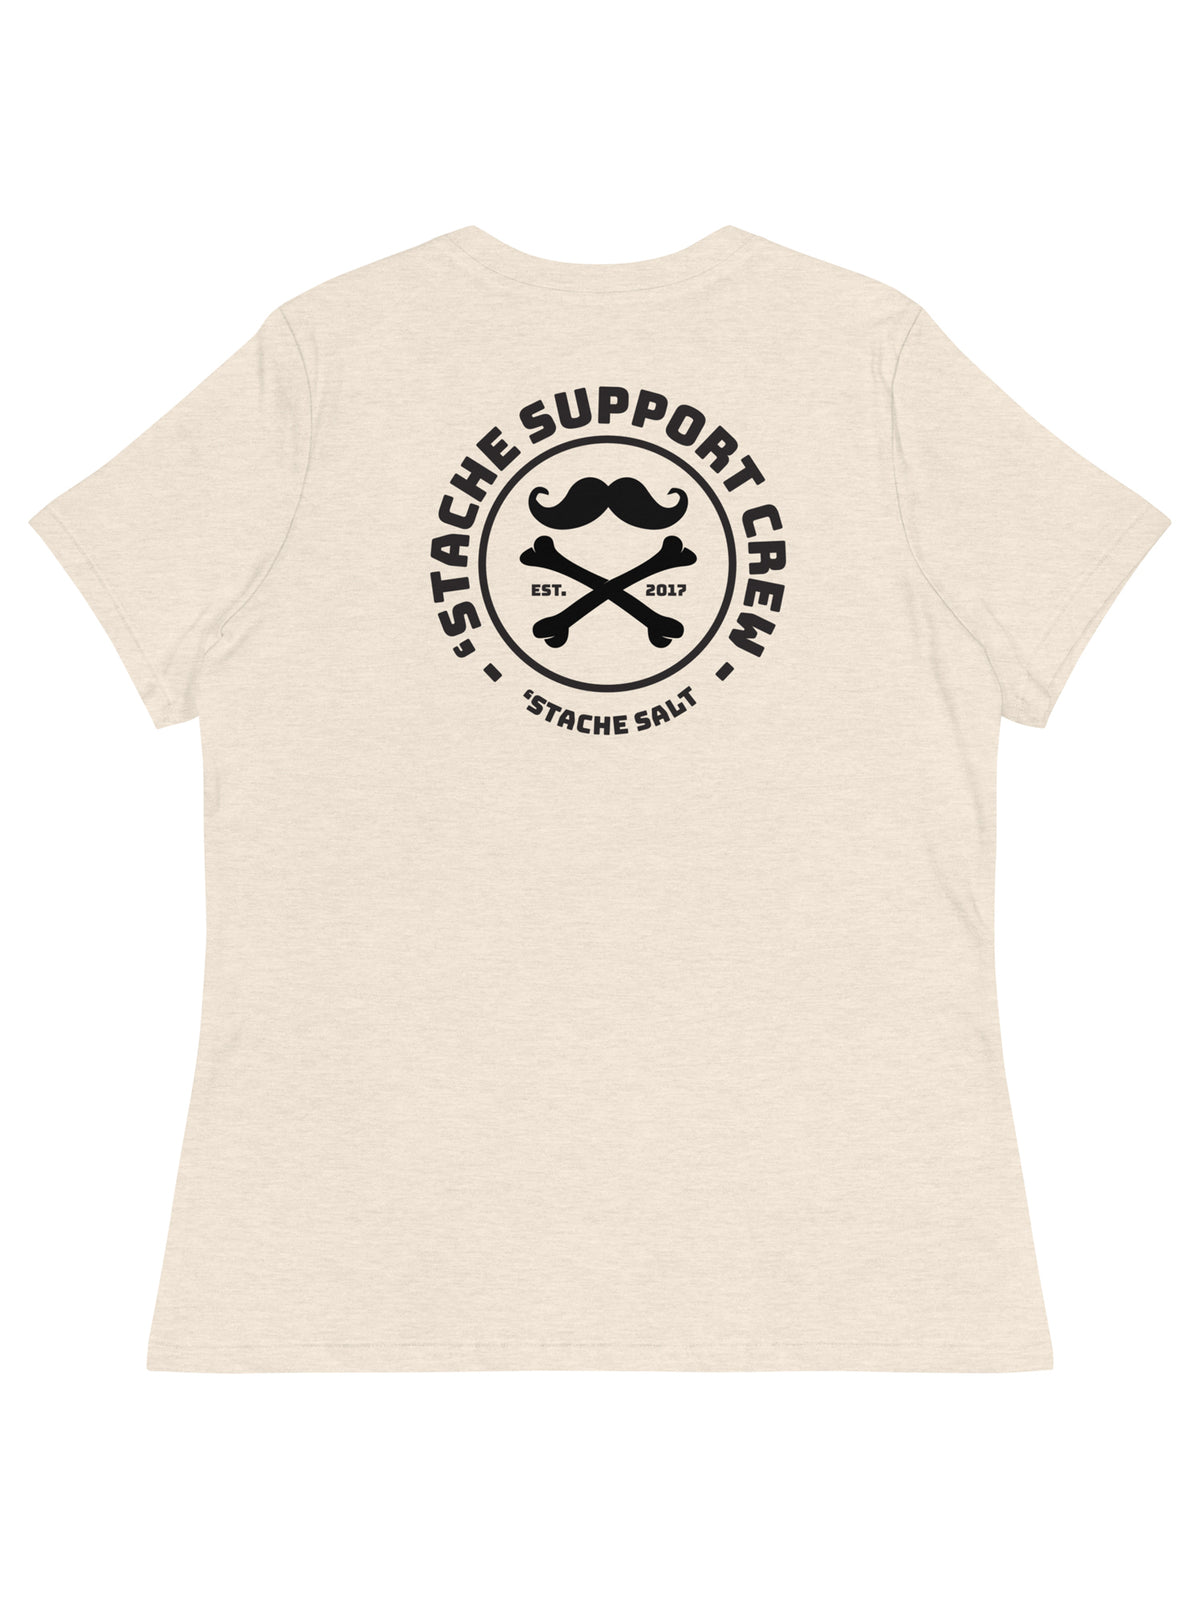 Ladies ‘Stache Support Crew T-Shirt